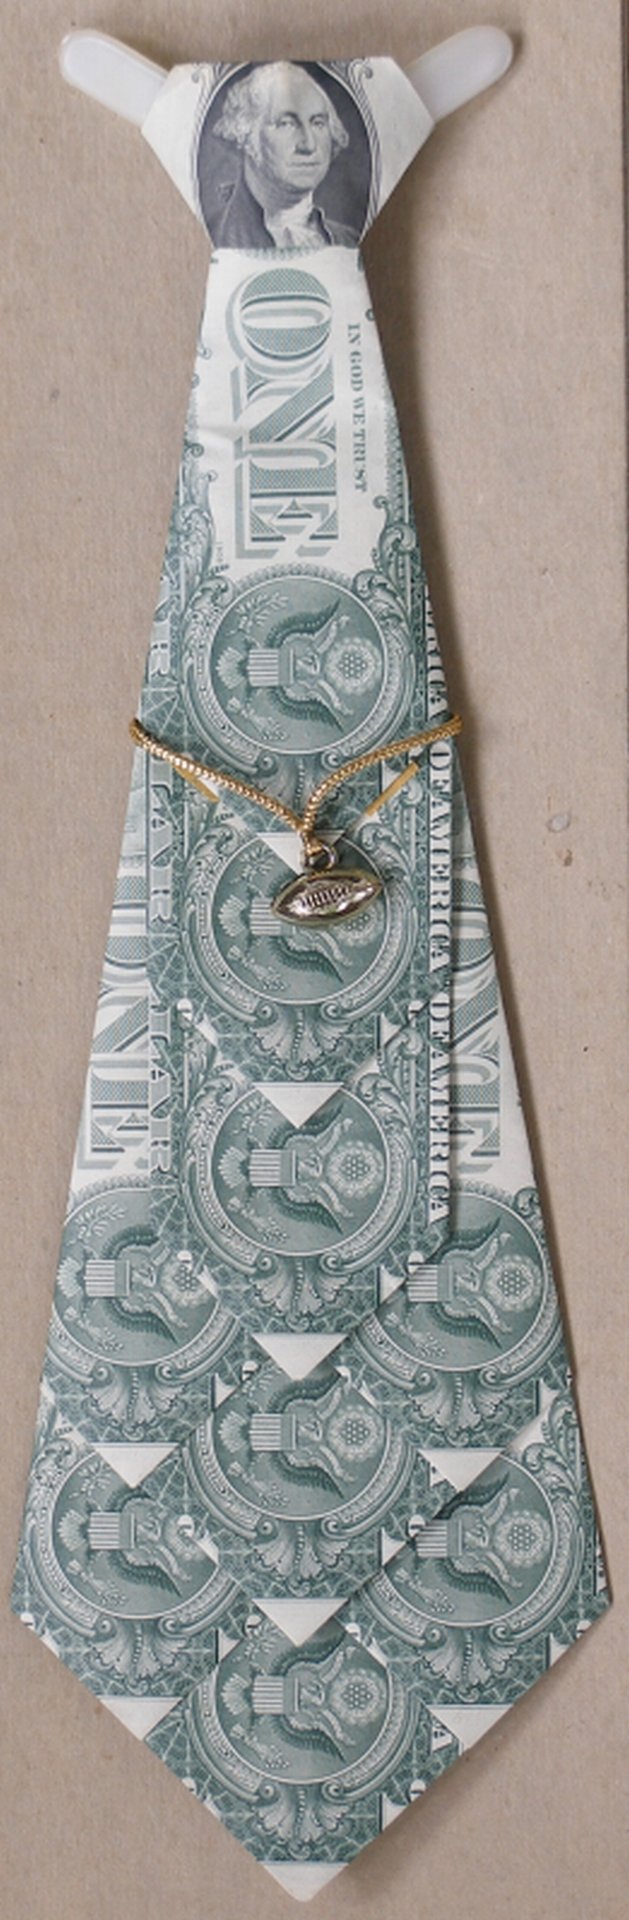 dollar necktie800x600.jpg